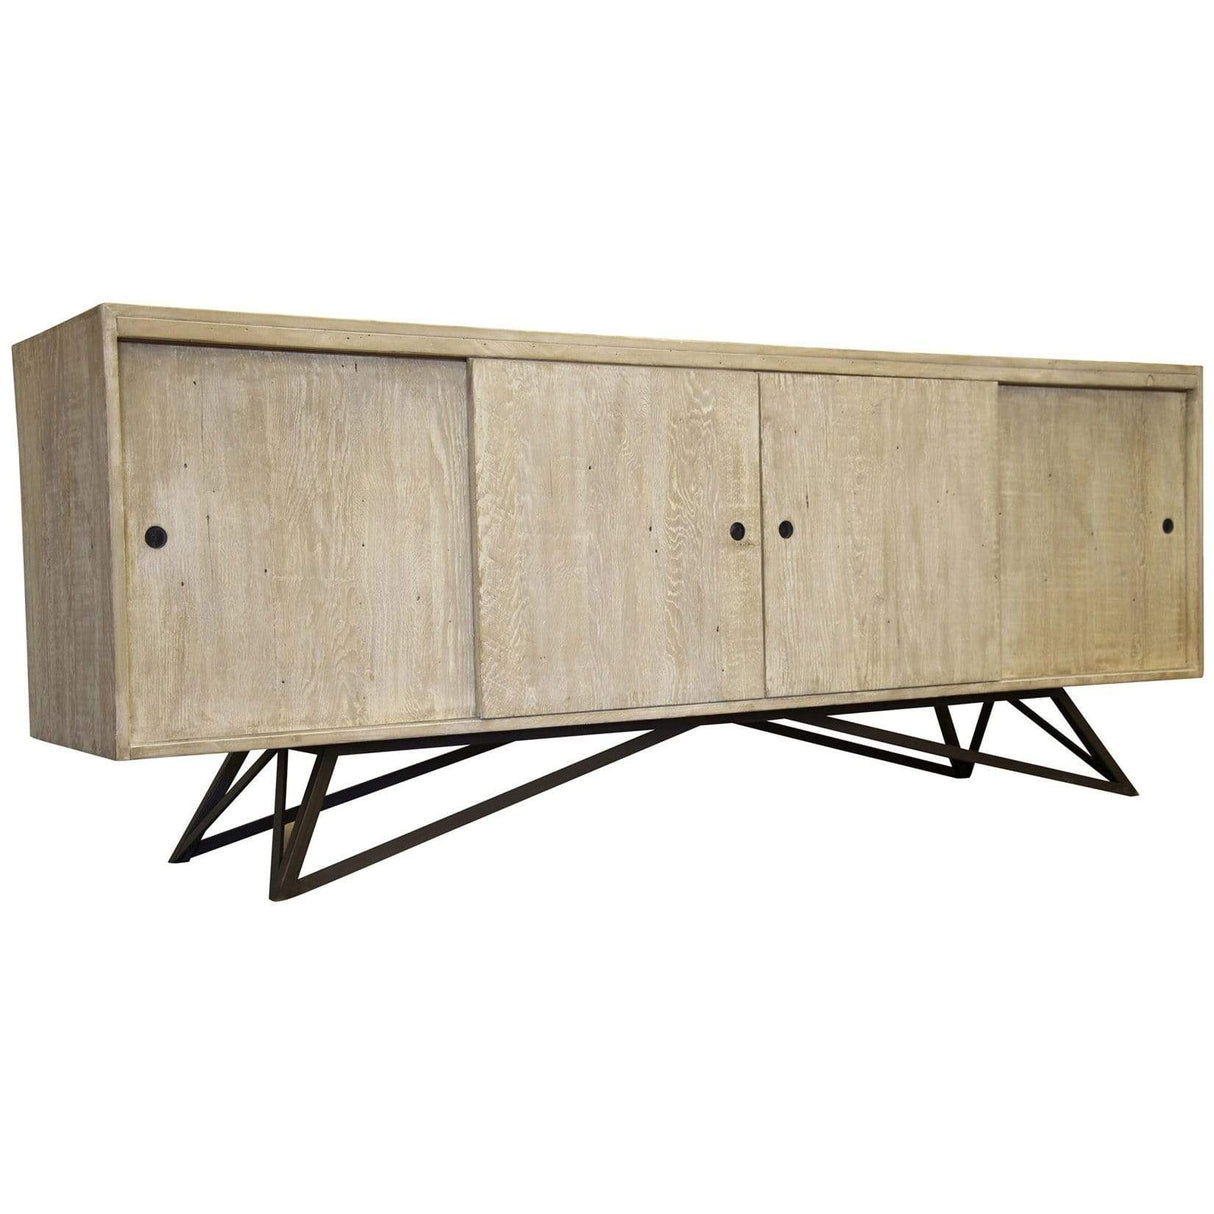 CFC Byron Sideboard Furniture CFC-OW183 00818484021509